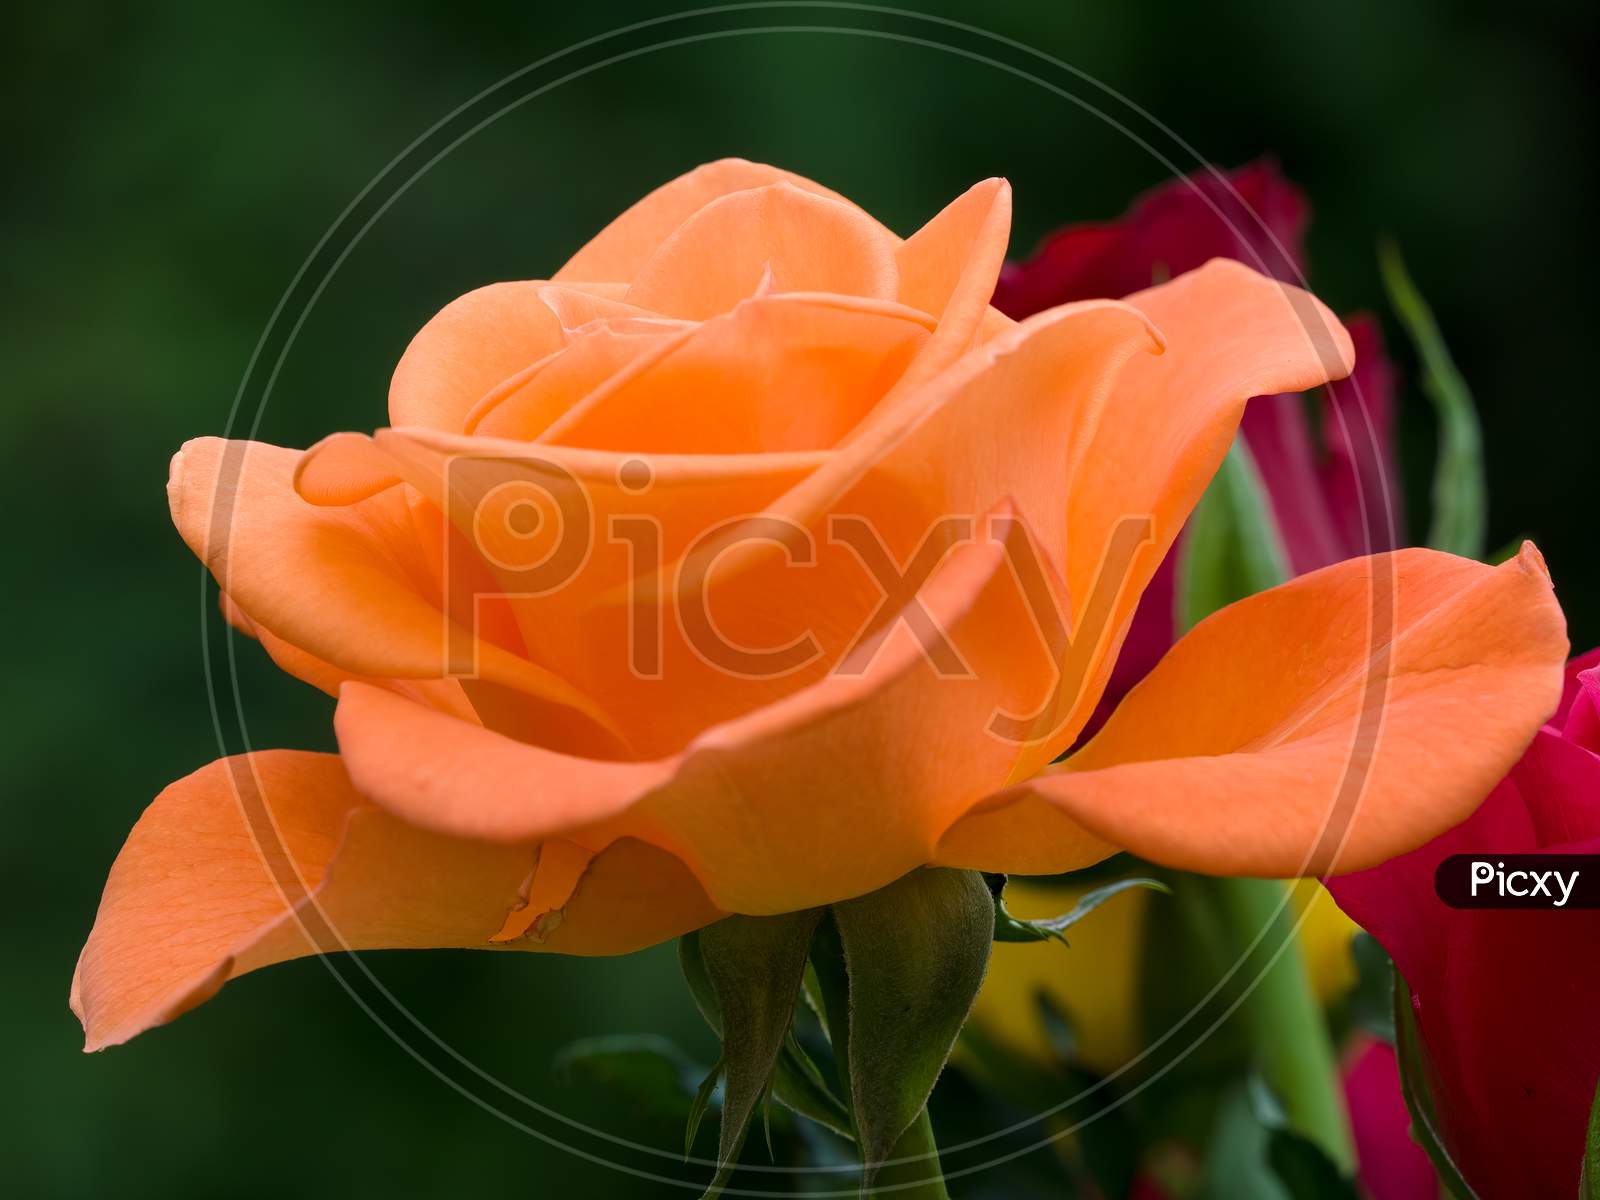 Close-Up View Of A Beautiful Orange Rose